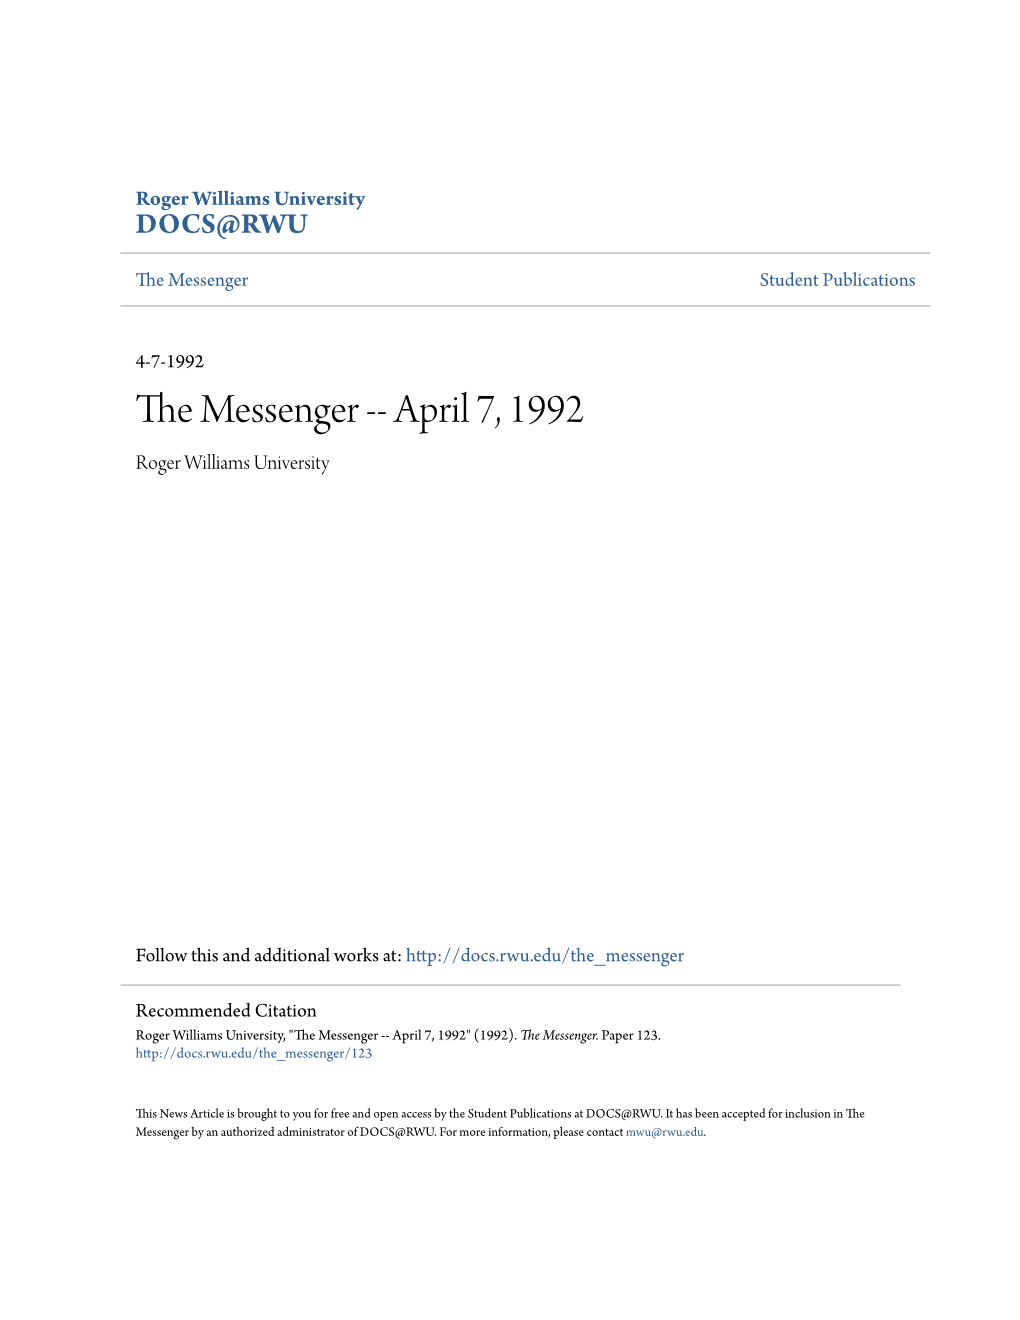 The Messenger -- April 7, 1992